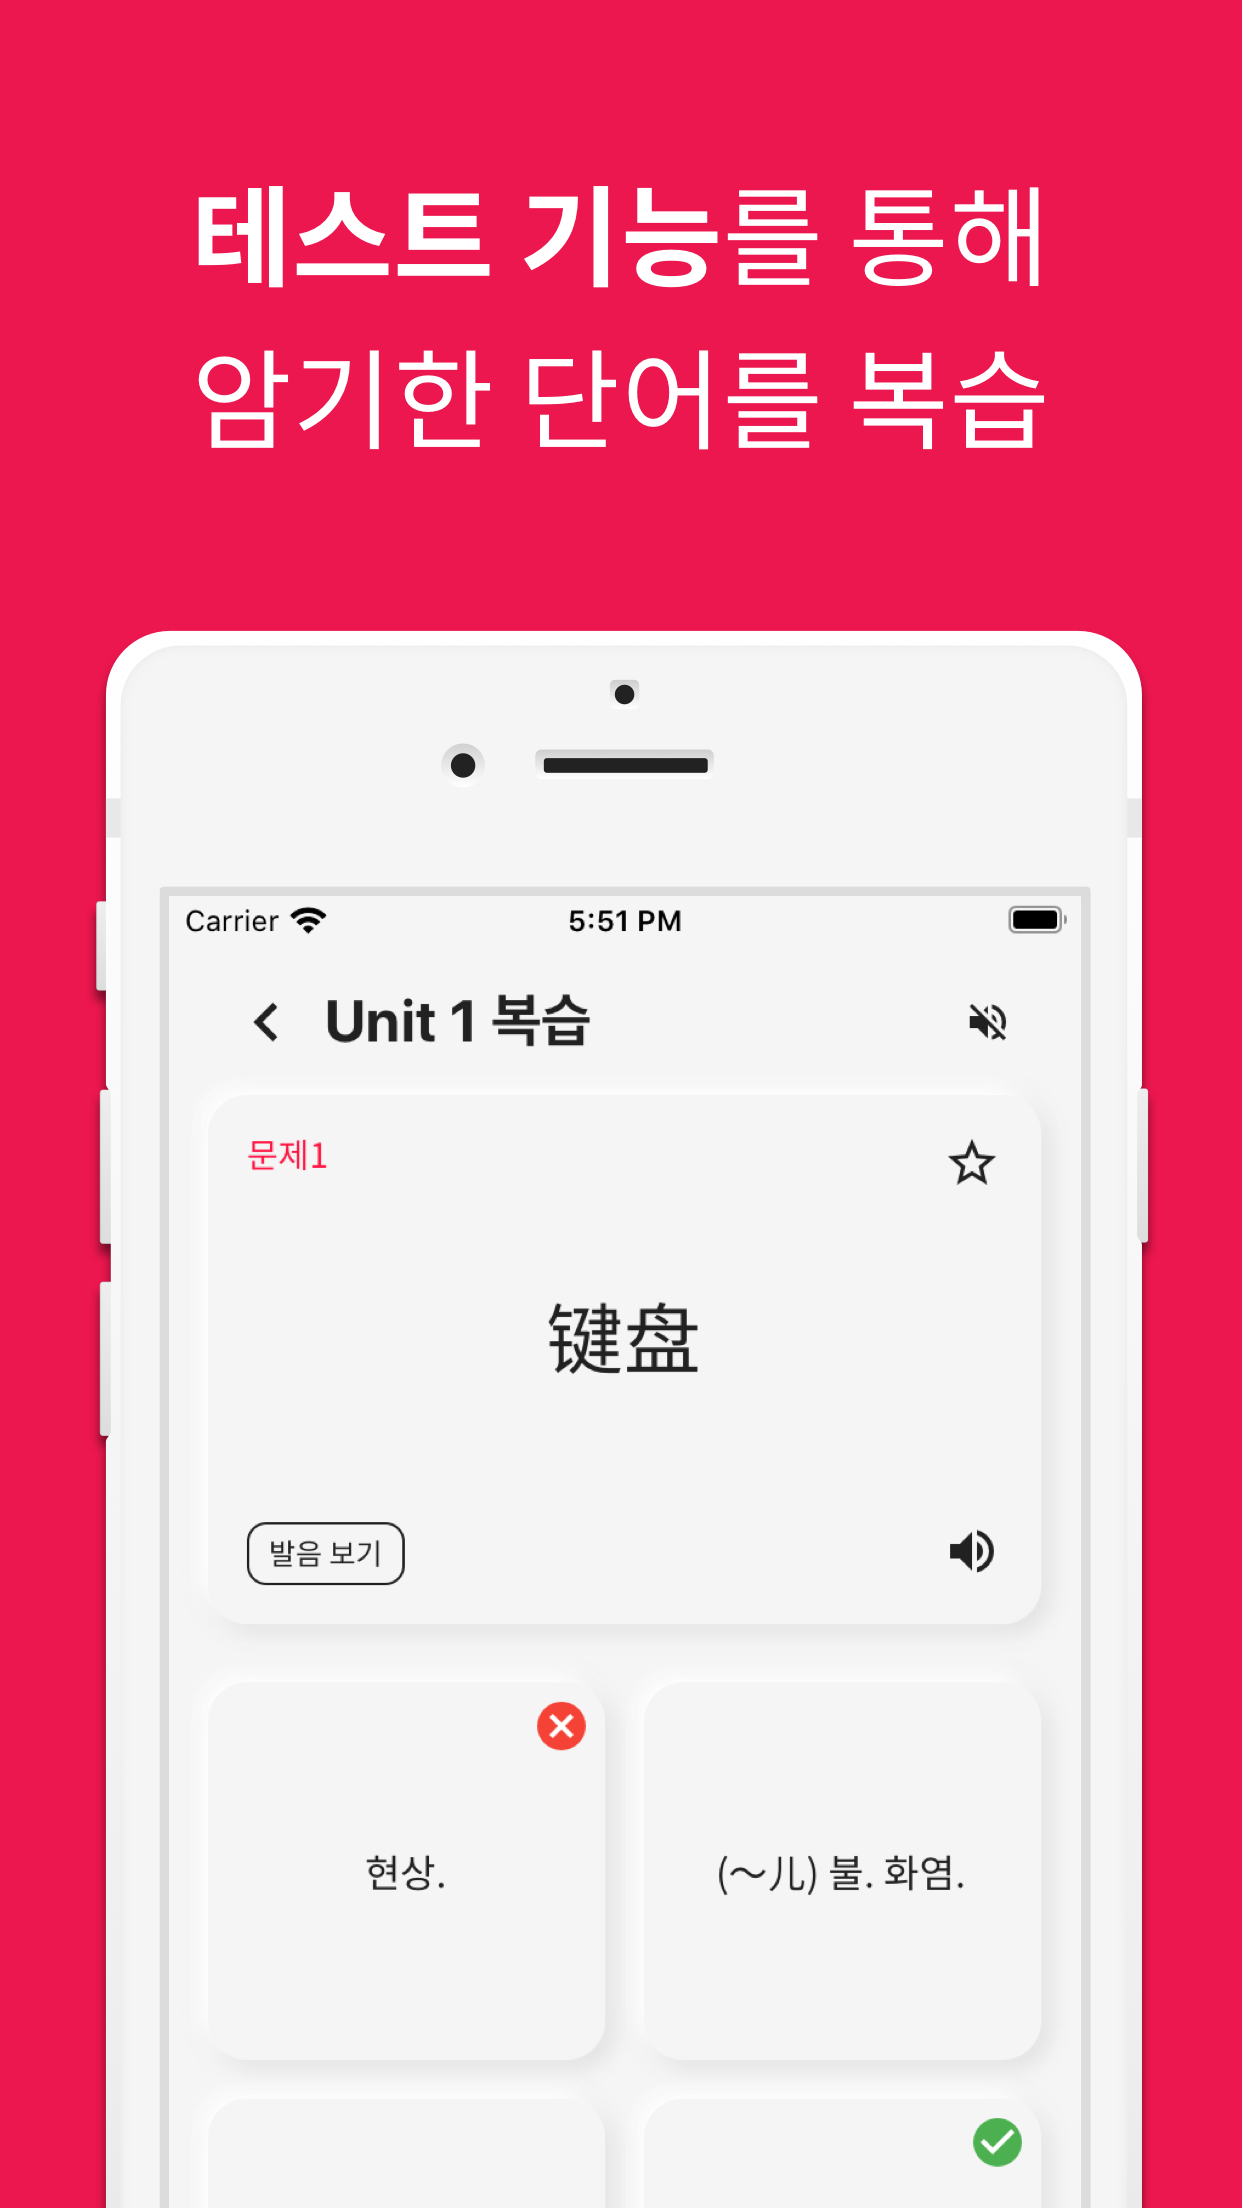 HSK 중국어 단어앱 - 앱 스크린 샷6